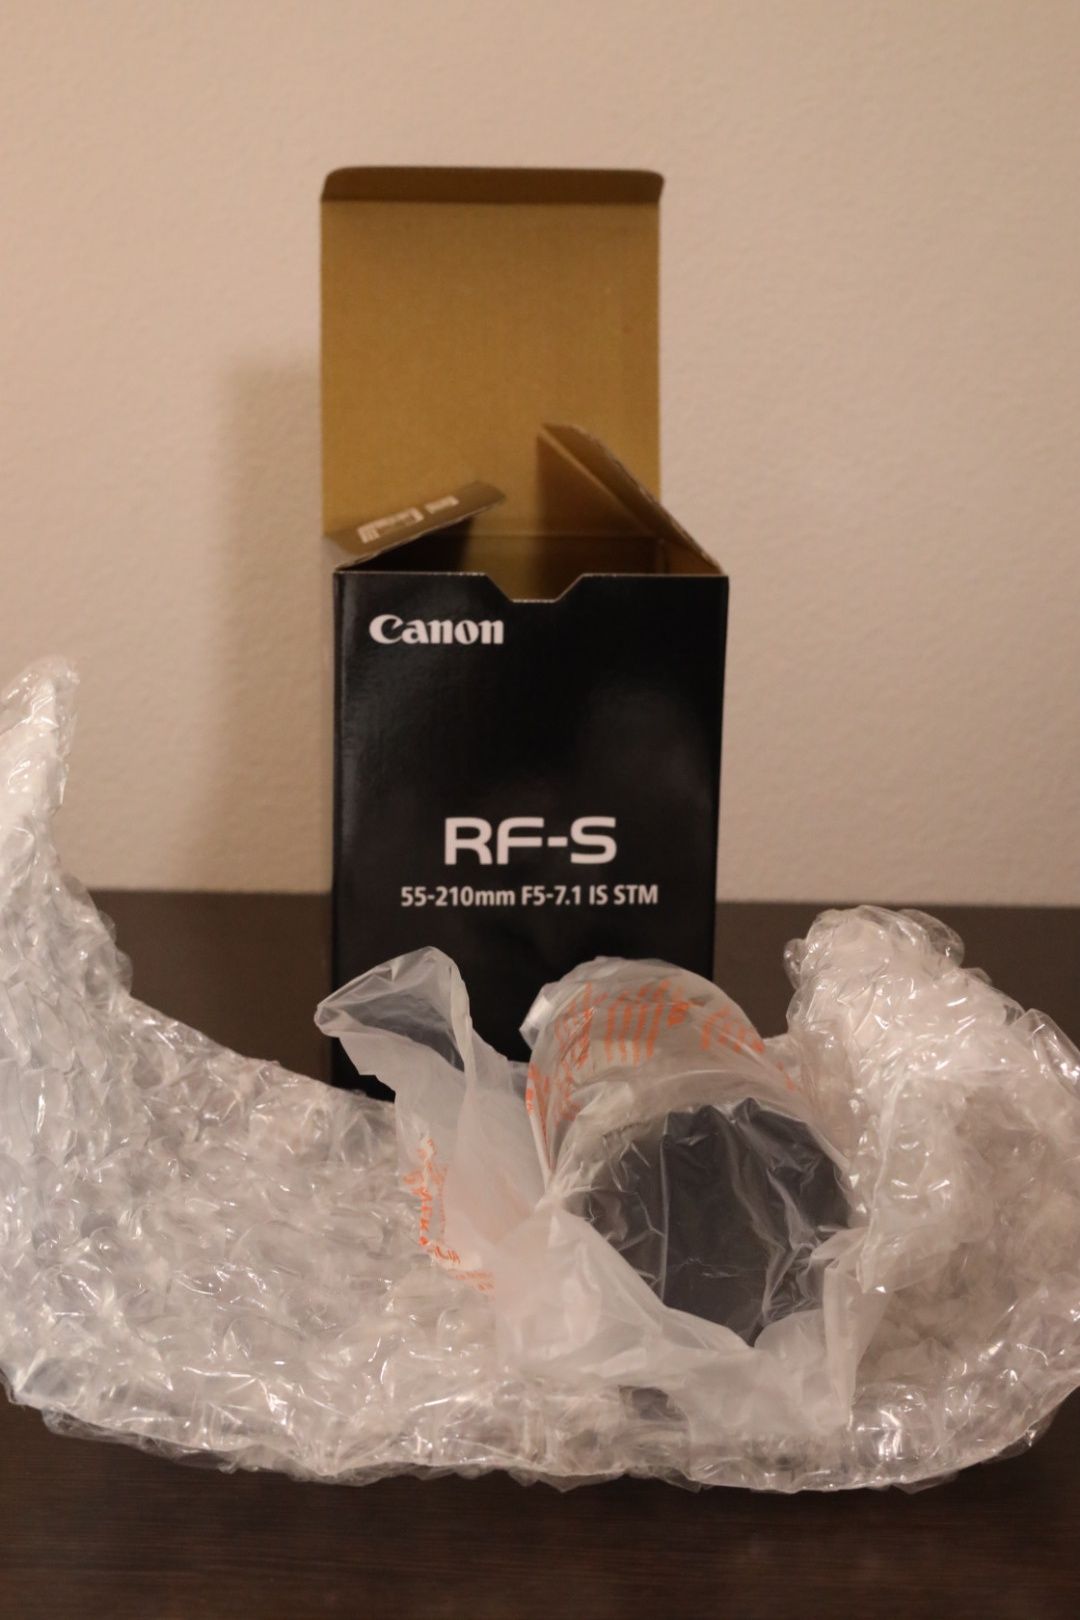 Canon Rf-s 55-210mm F5-7.1 IS STM Objetiva NOVA